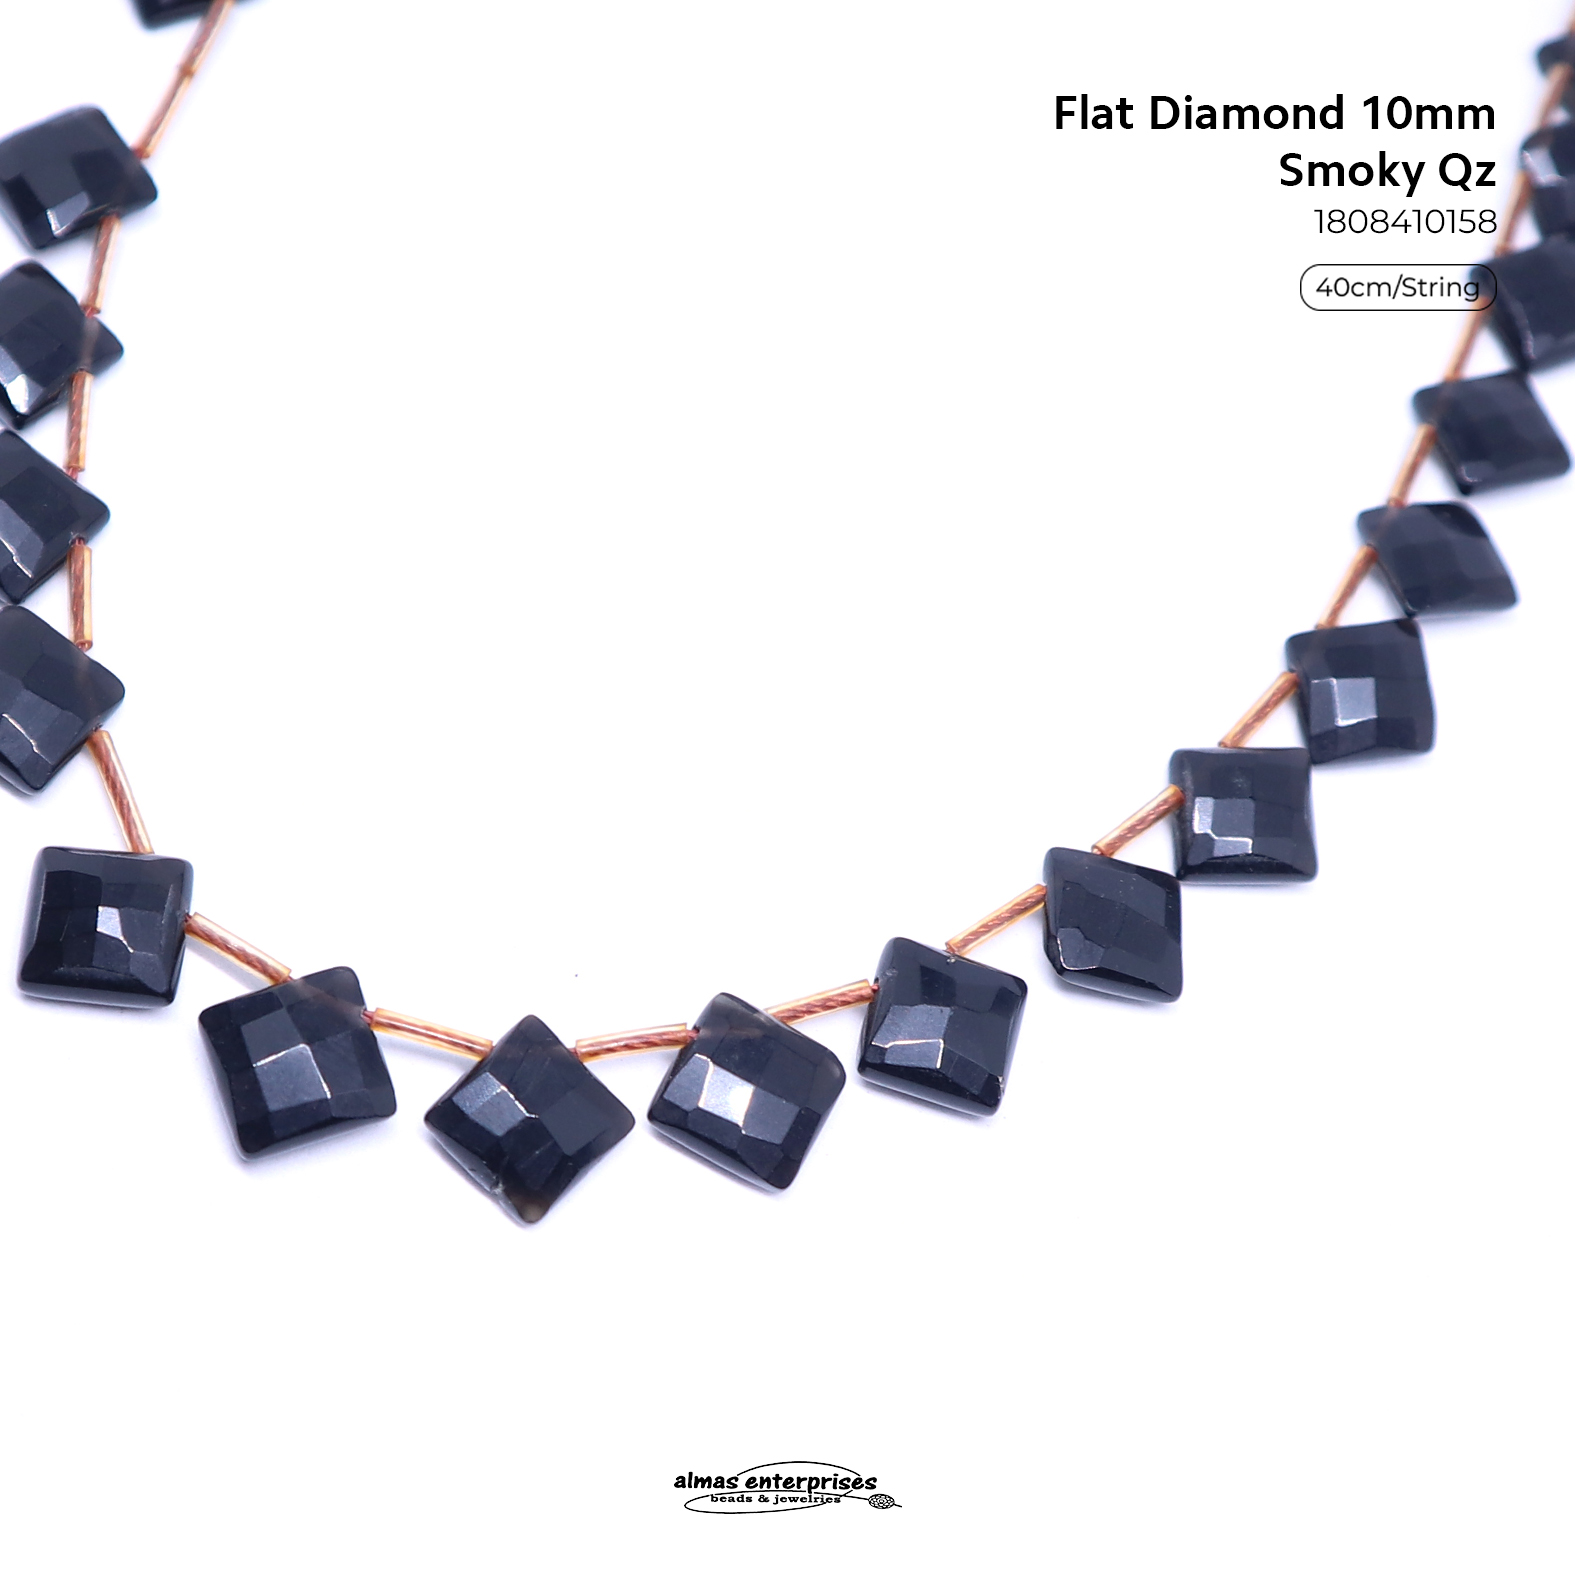 Flat Diamond 10mm Smoky Qz